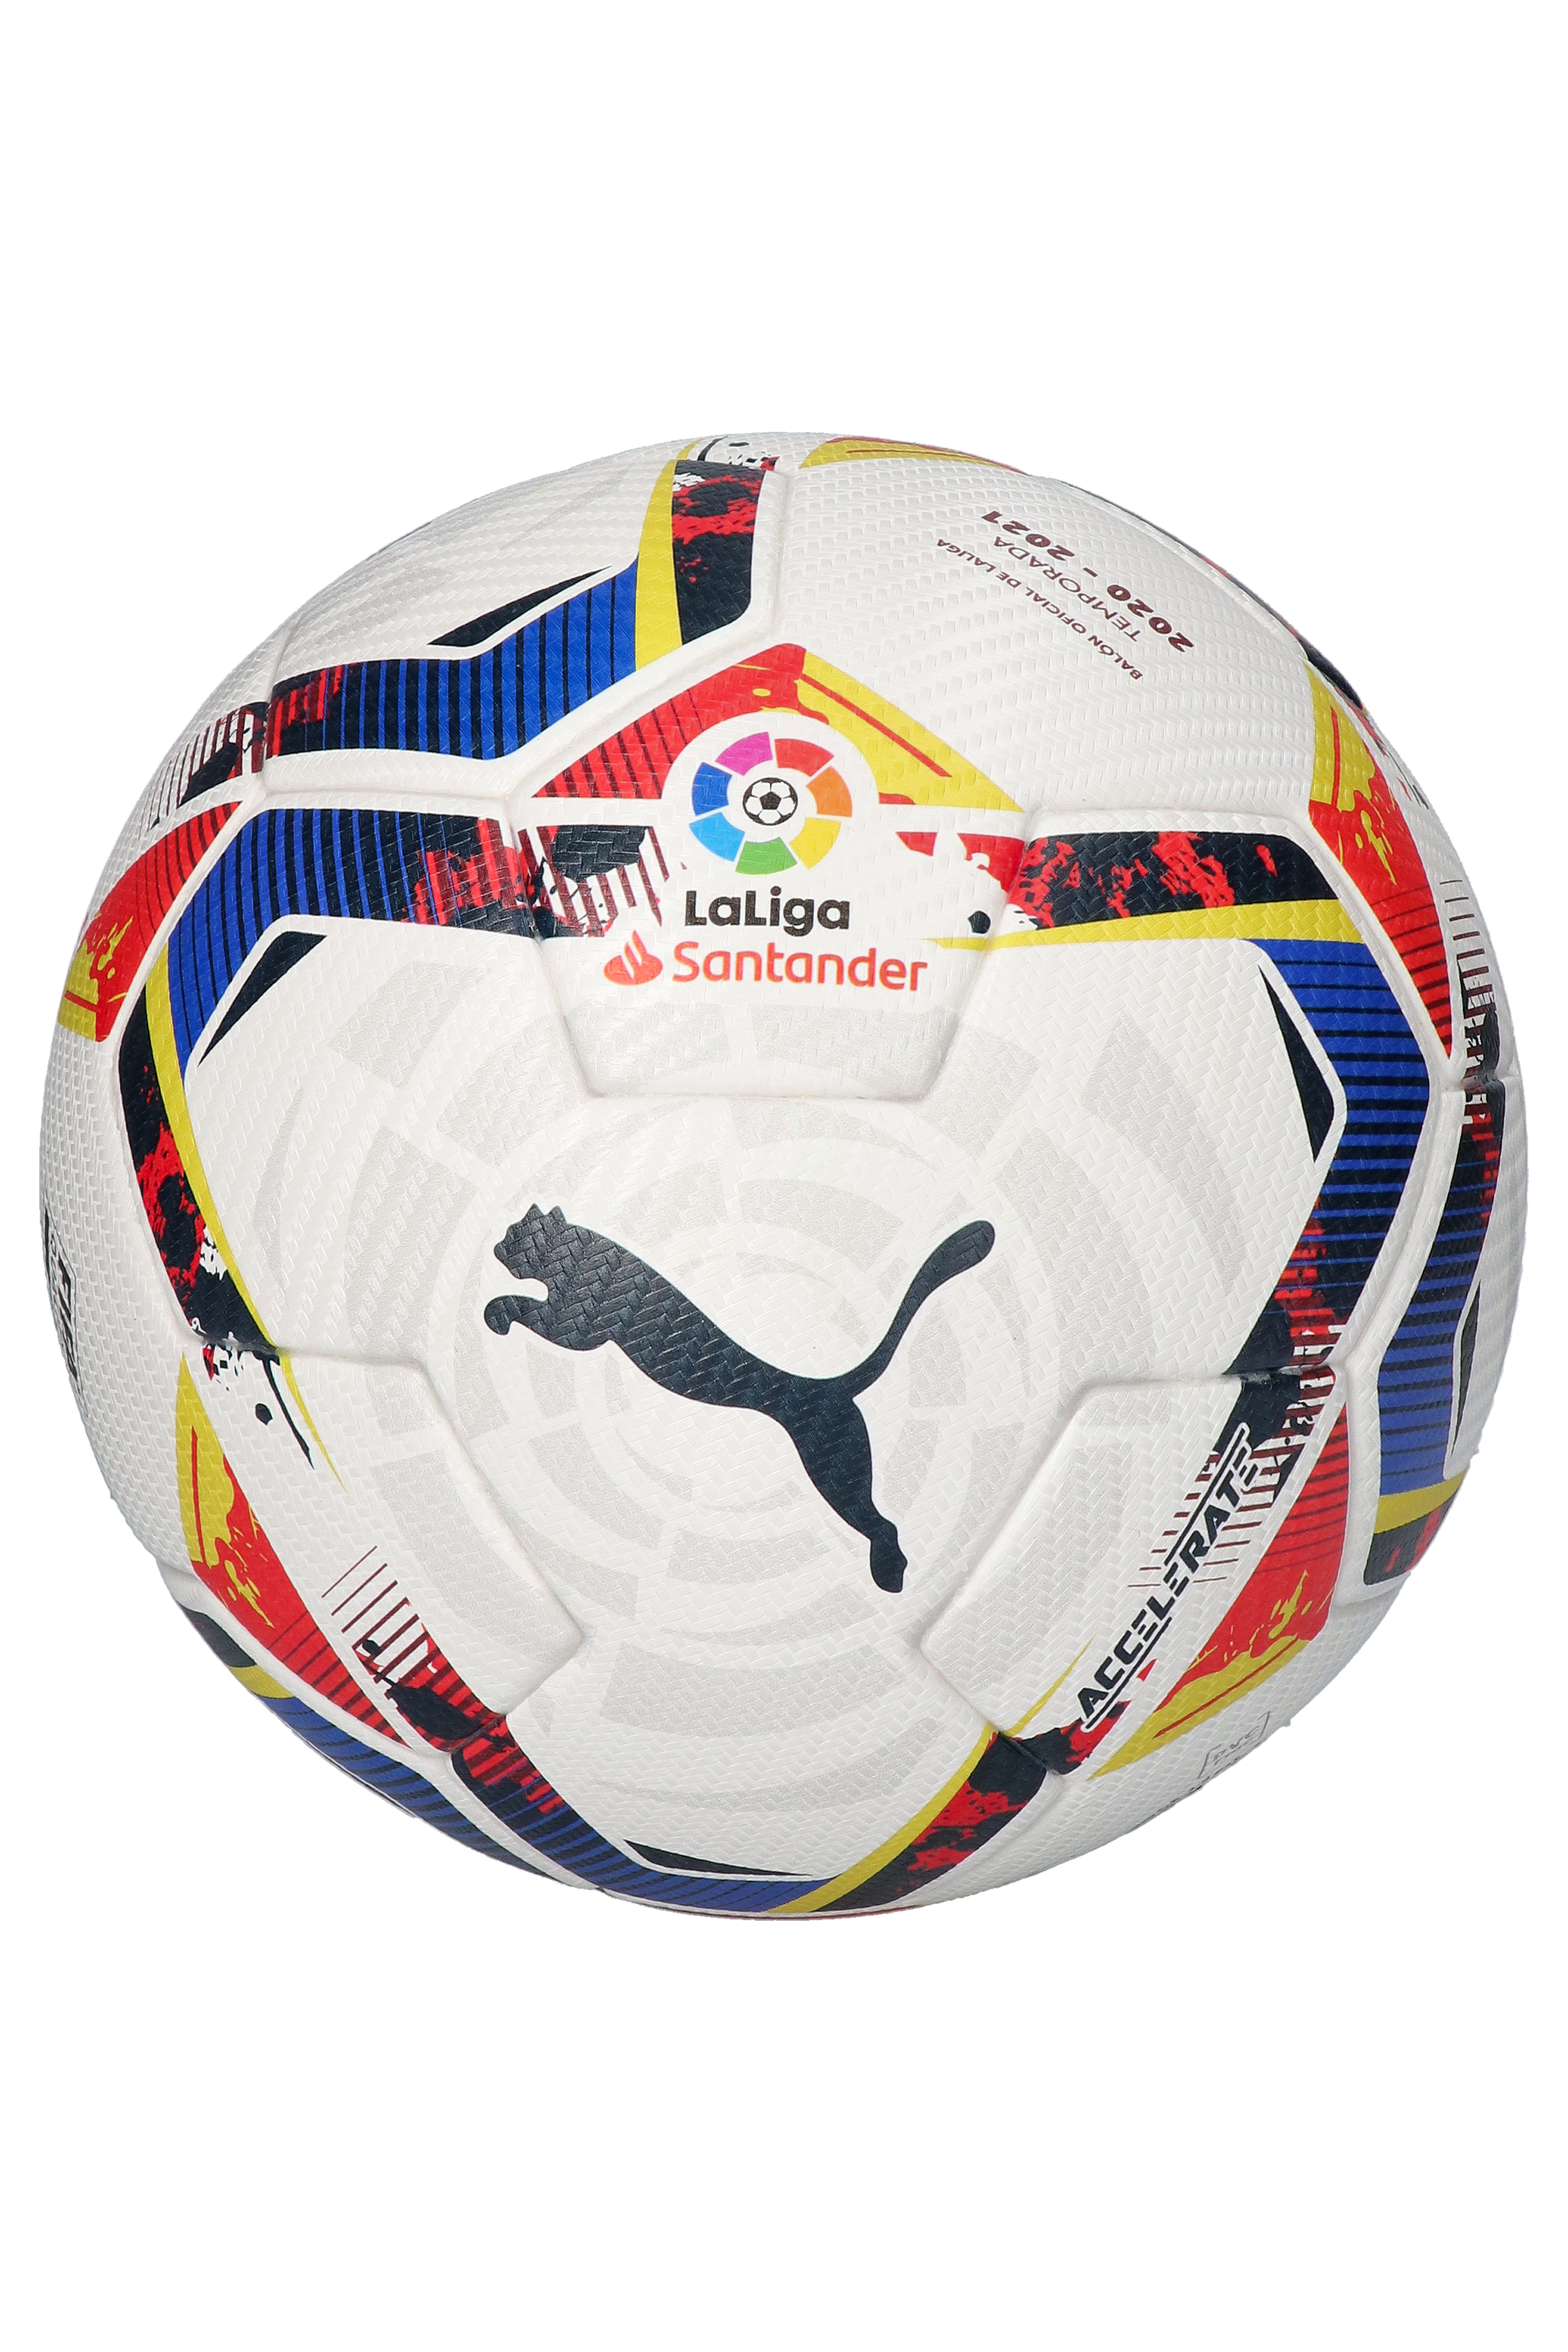 Ball Puma LaLiga 1 Accelerate FIFA Quality Pro size 5 | R-GOL.com - Football boots & equipment